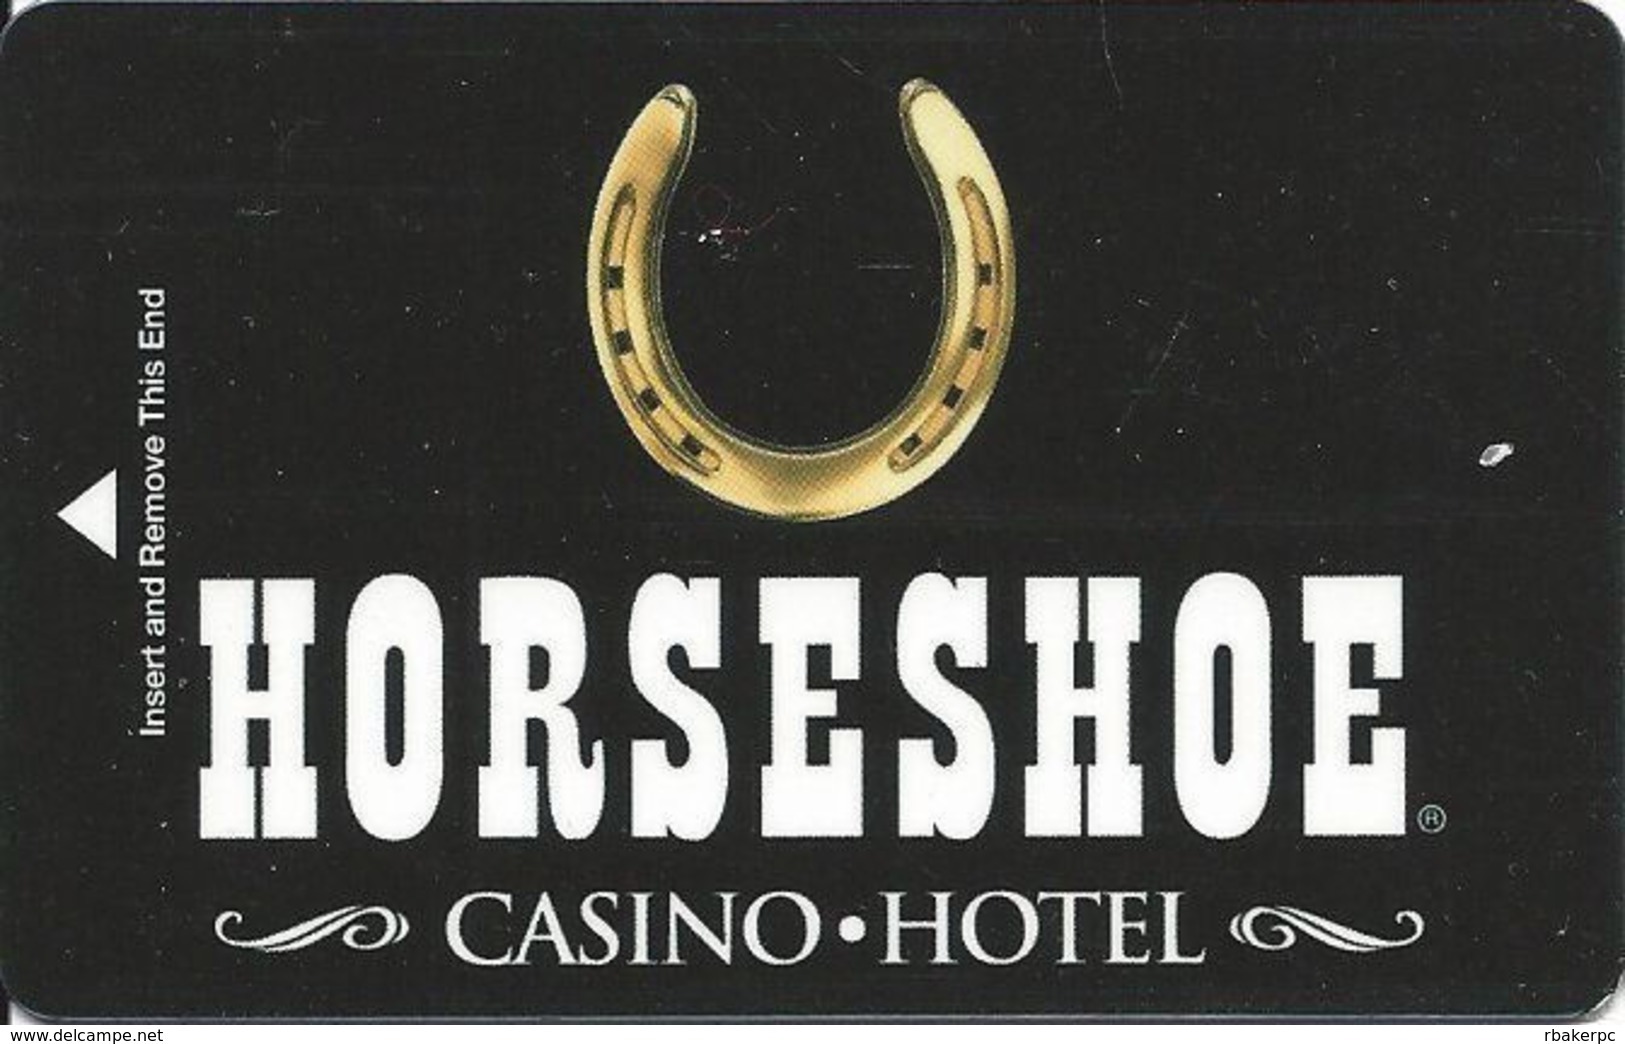 Horseshoe Casino - Tunica MS - Hotel Room Key Card - Hotel Keycards